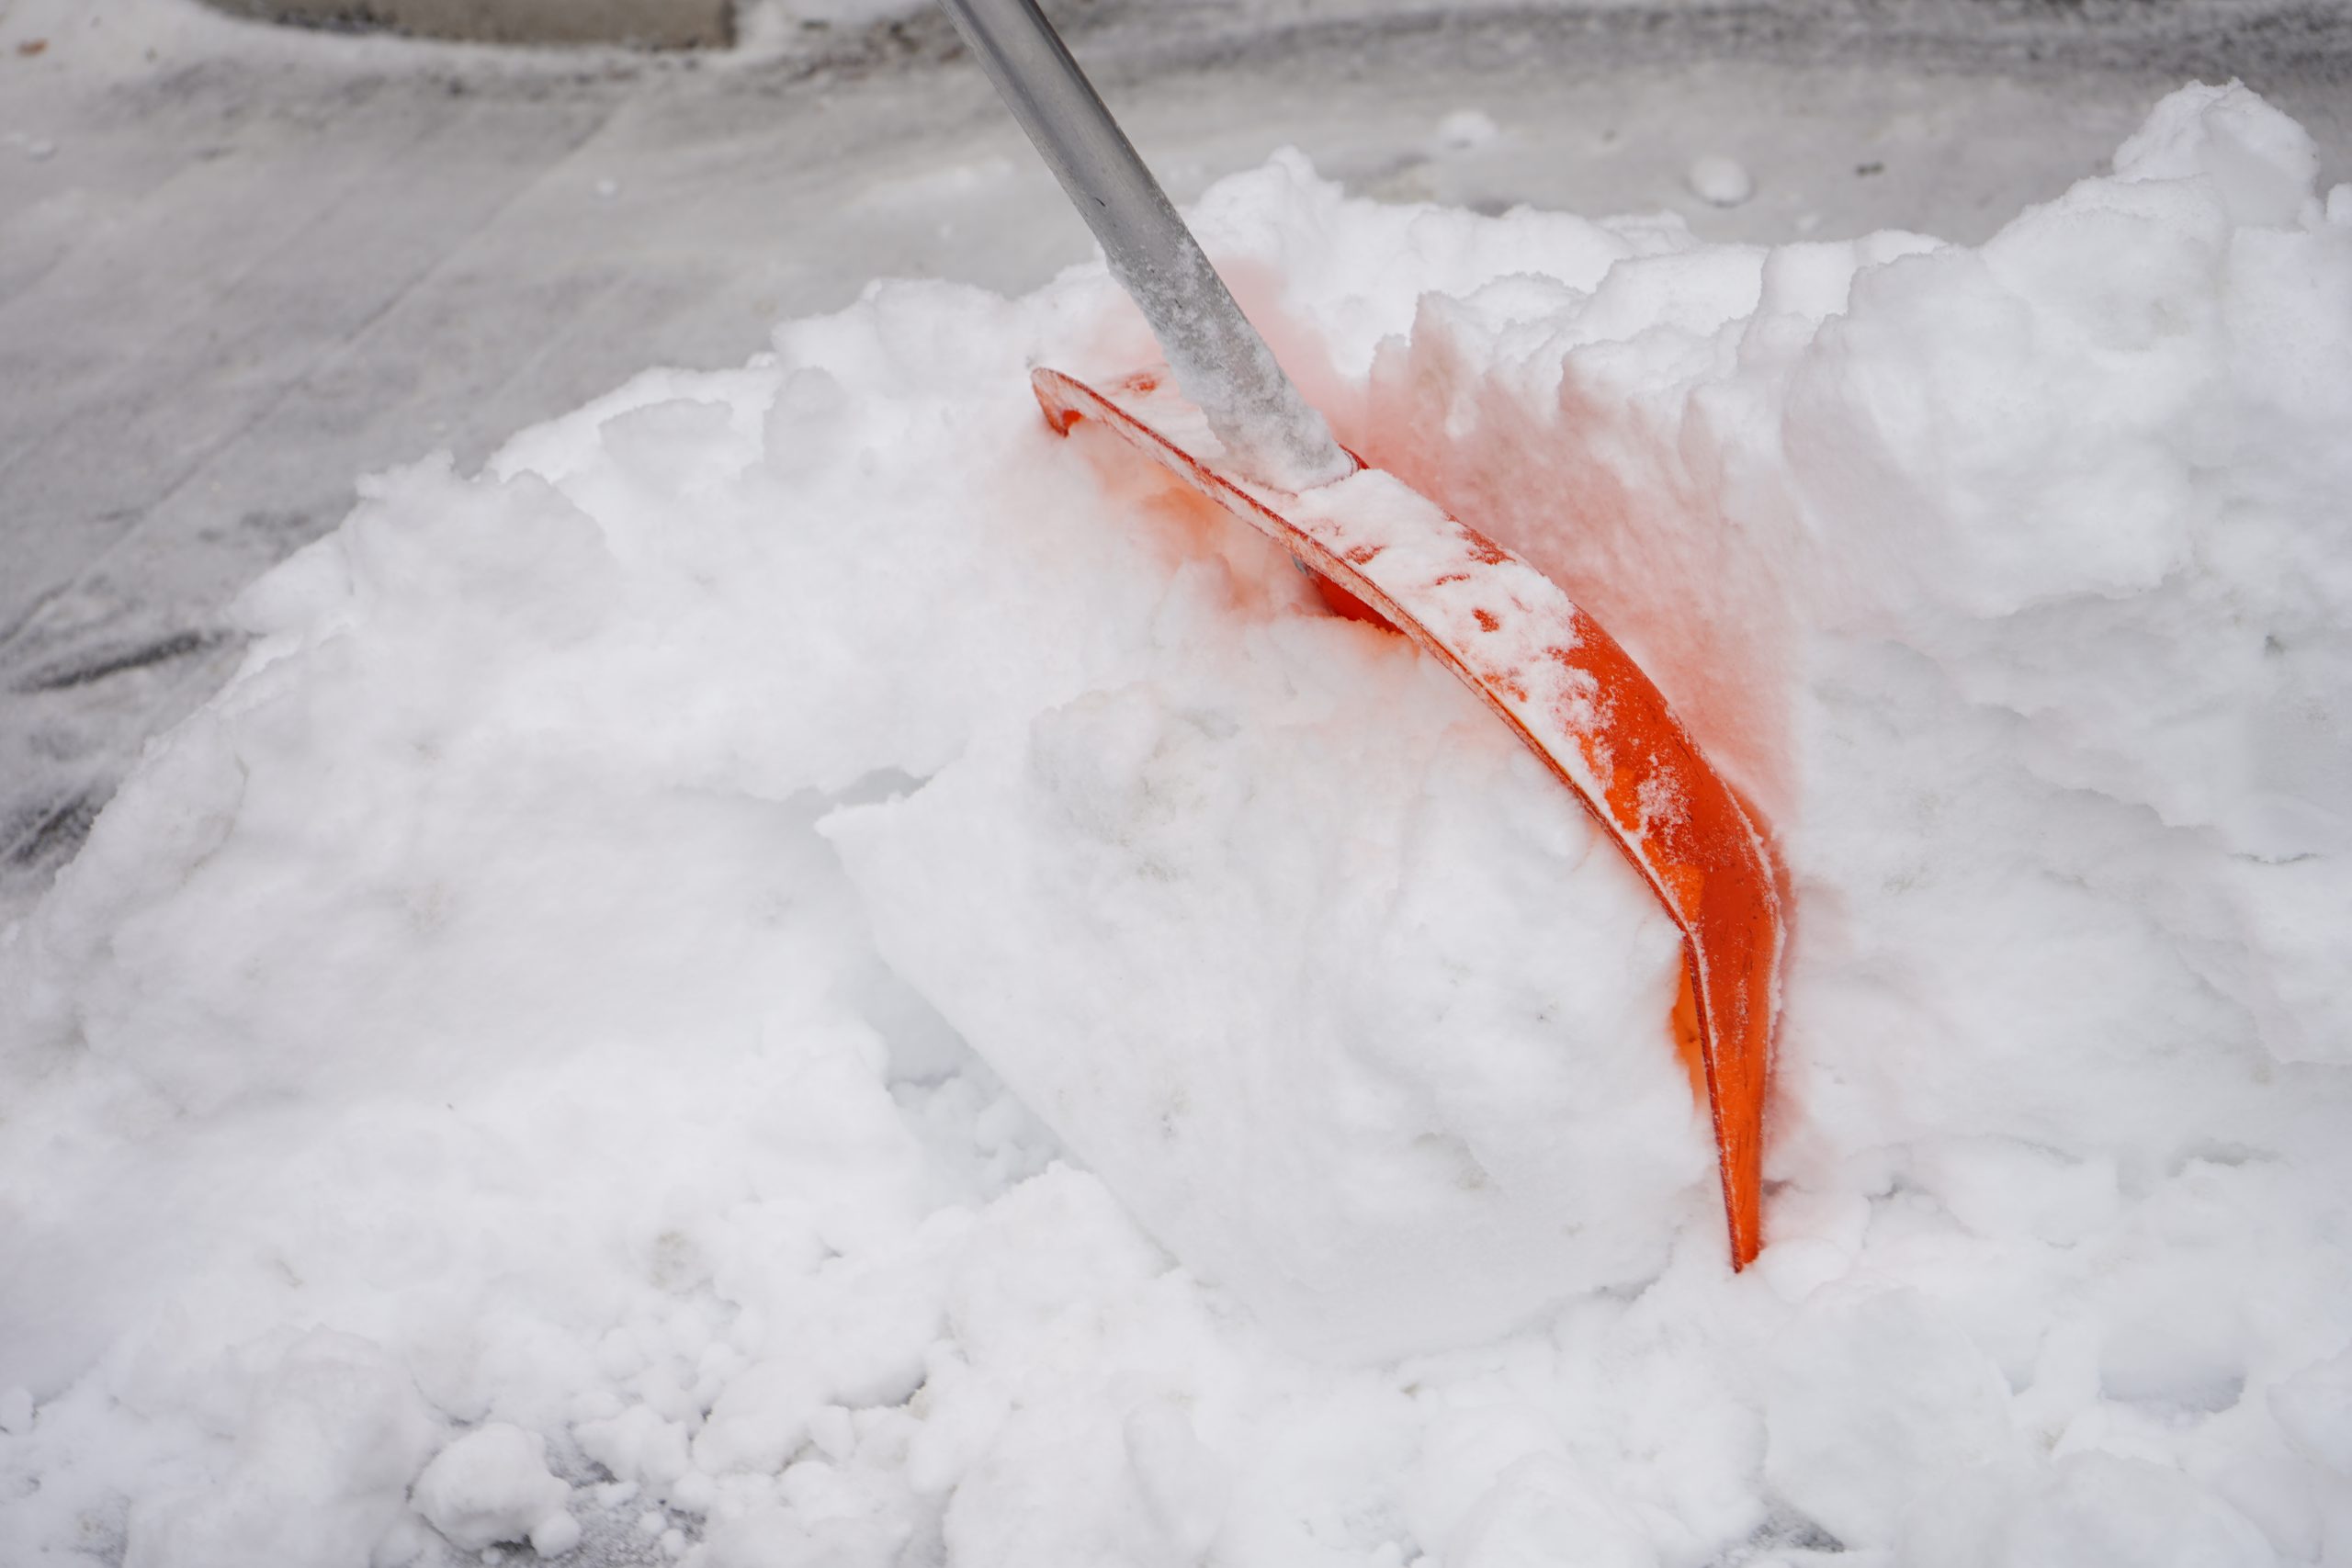 Работы по уборке снега проходят ежедневно на всех улицах. Фото: Анна Быкова, «Вечерняя Москва»